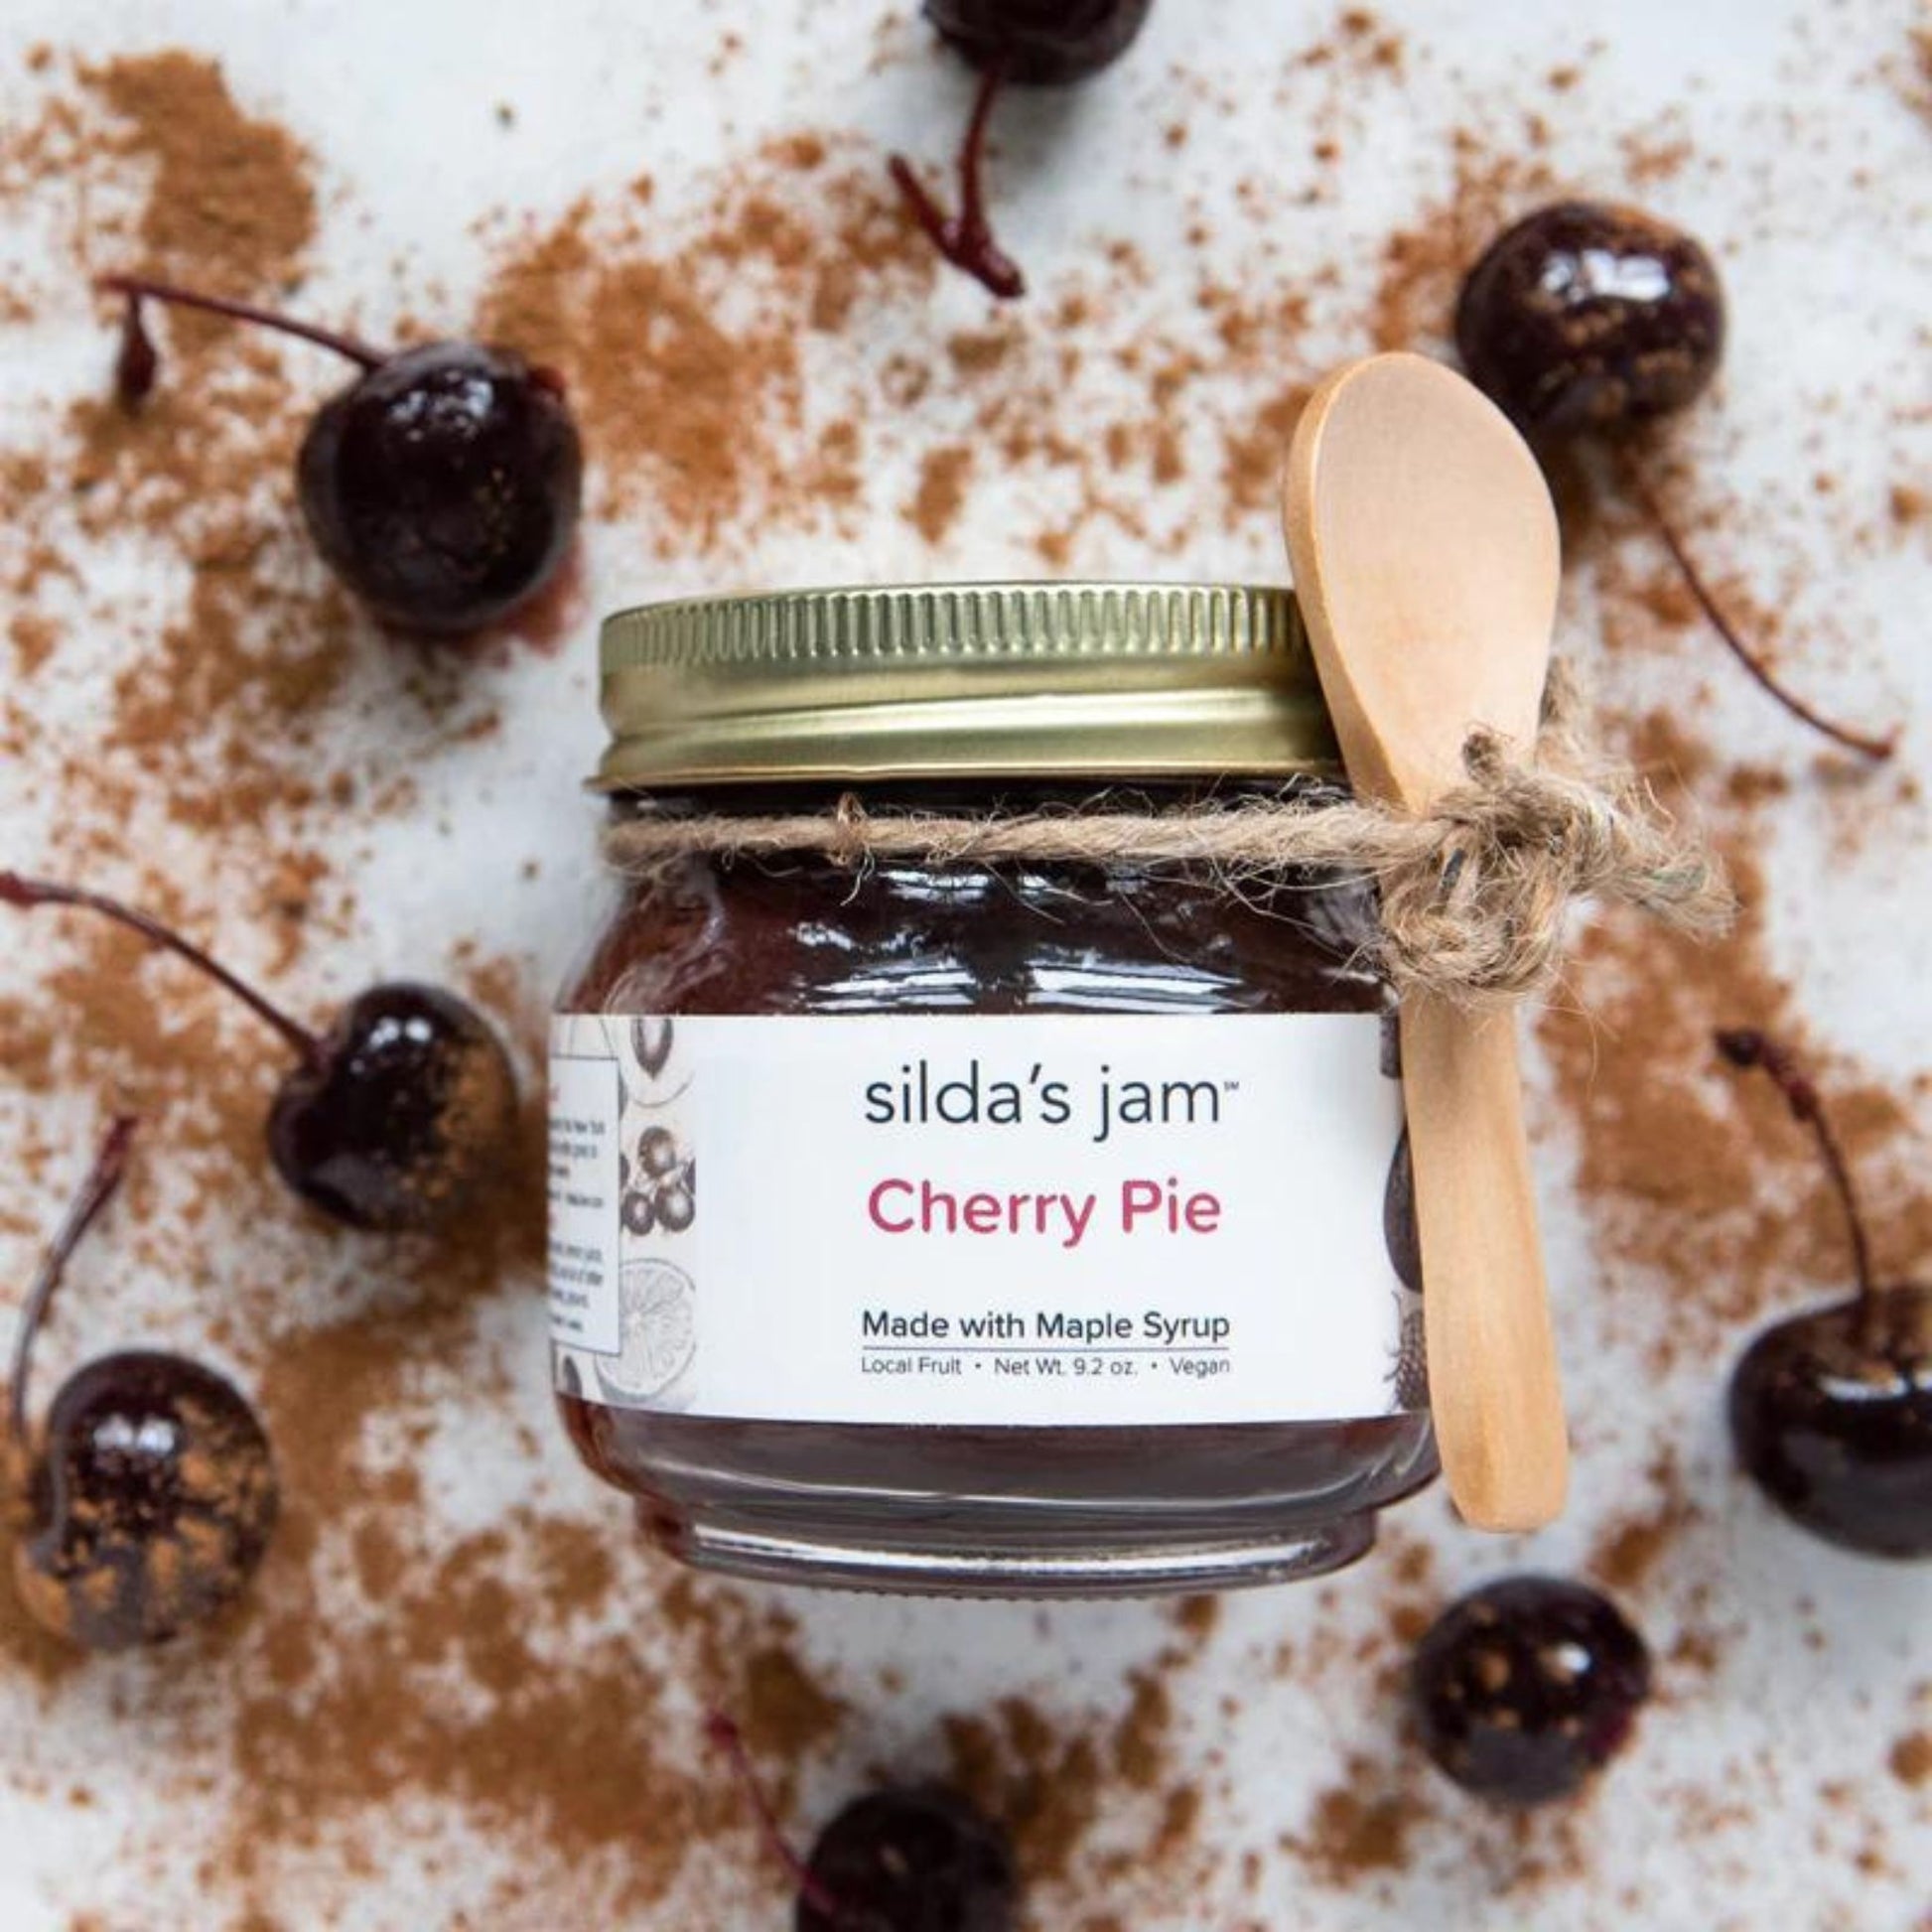 Cherry Pie Silda's Jam. Vegan. Made with Maple Syrup.9.2 Oz.